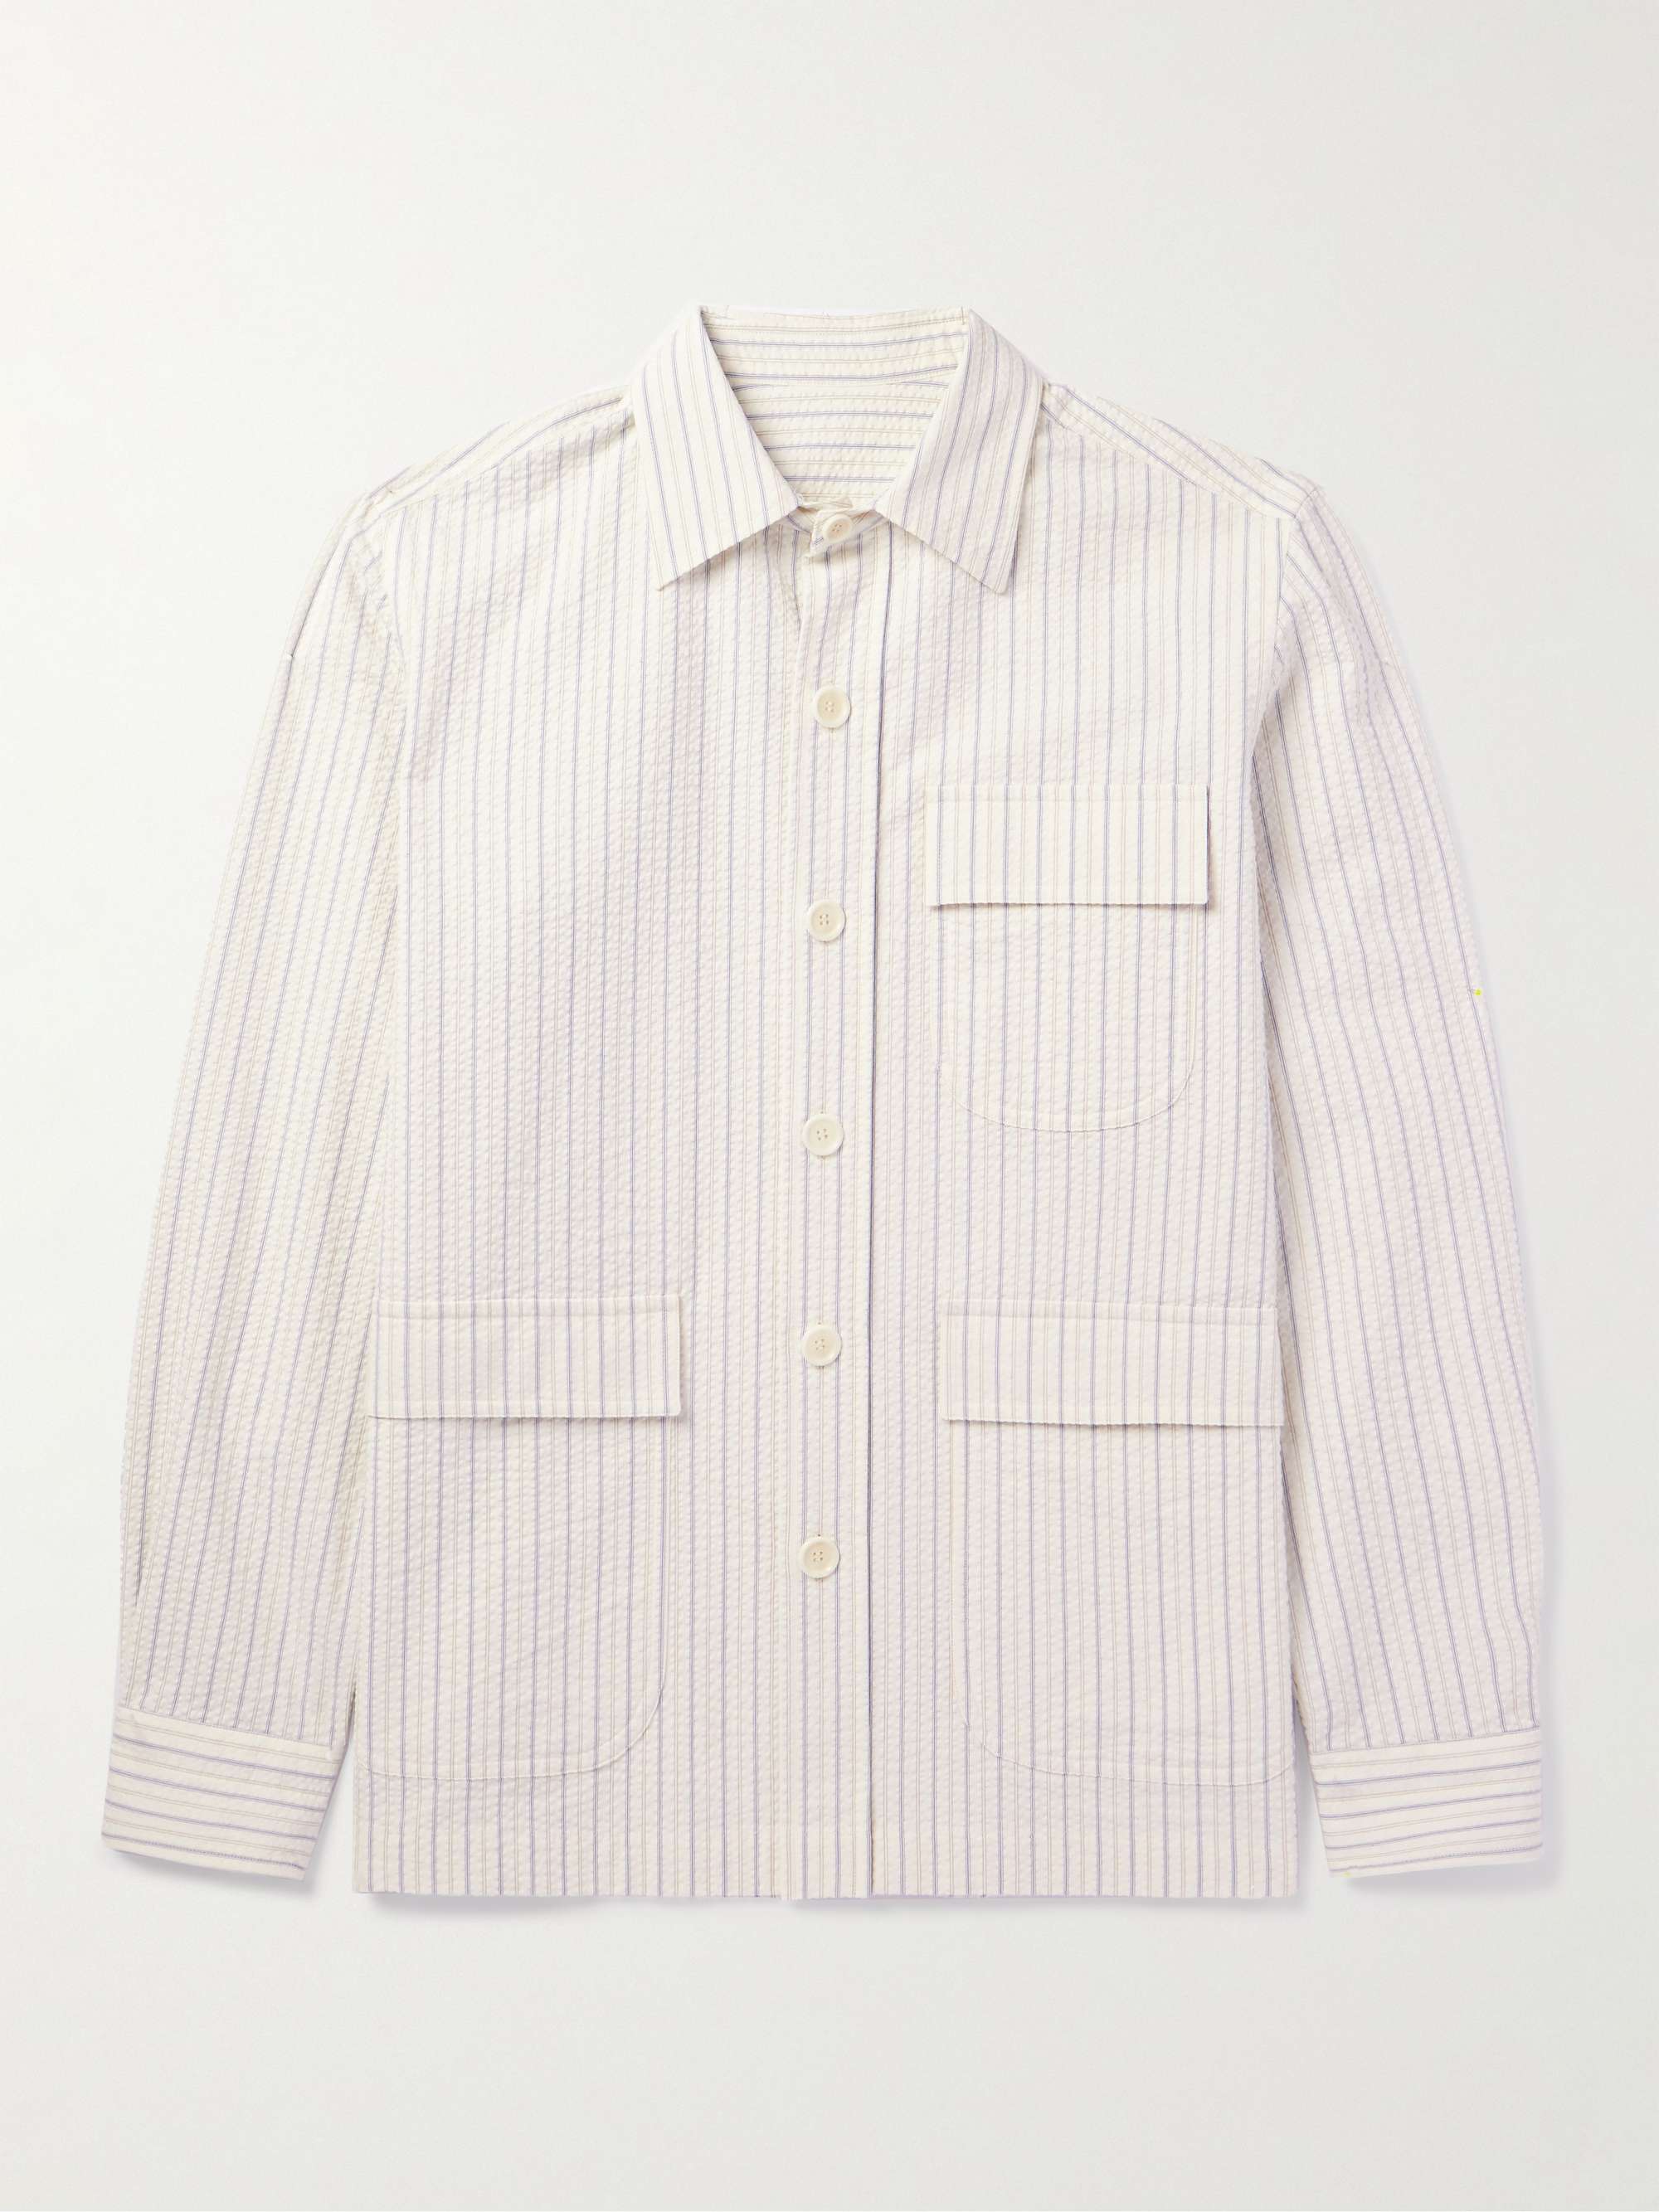 DE PETRILLO Striped Cotton-Seersucker Shirt for Men | MR PORTER